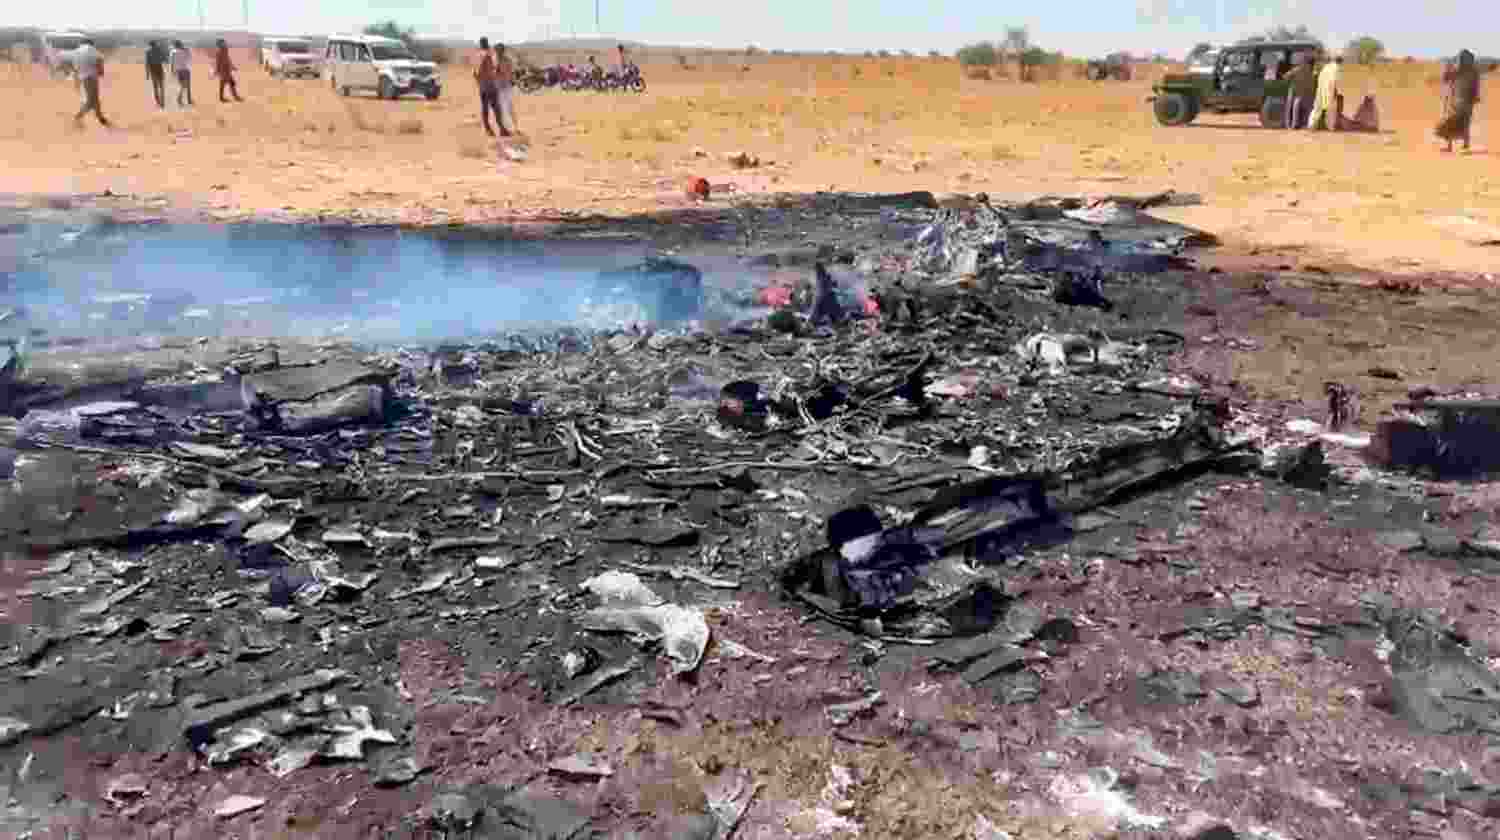 IAF’s remotely piloted aircraft crashes near Jaisalmer